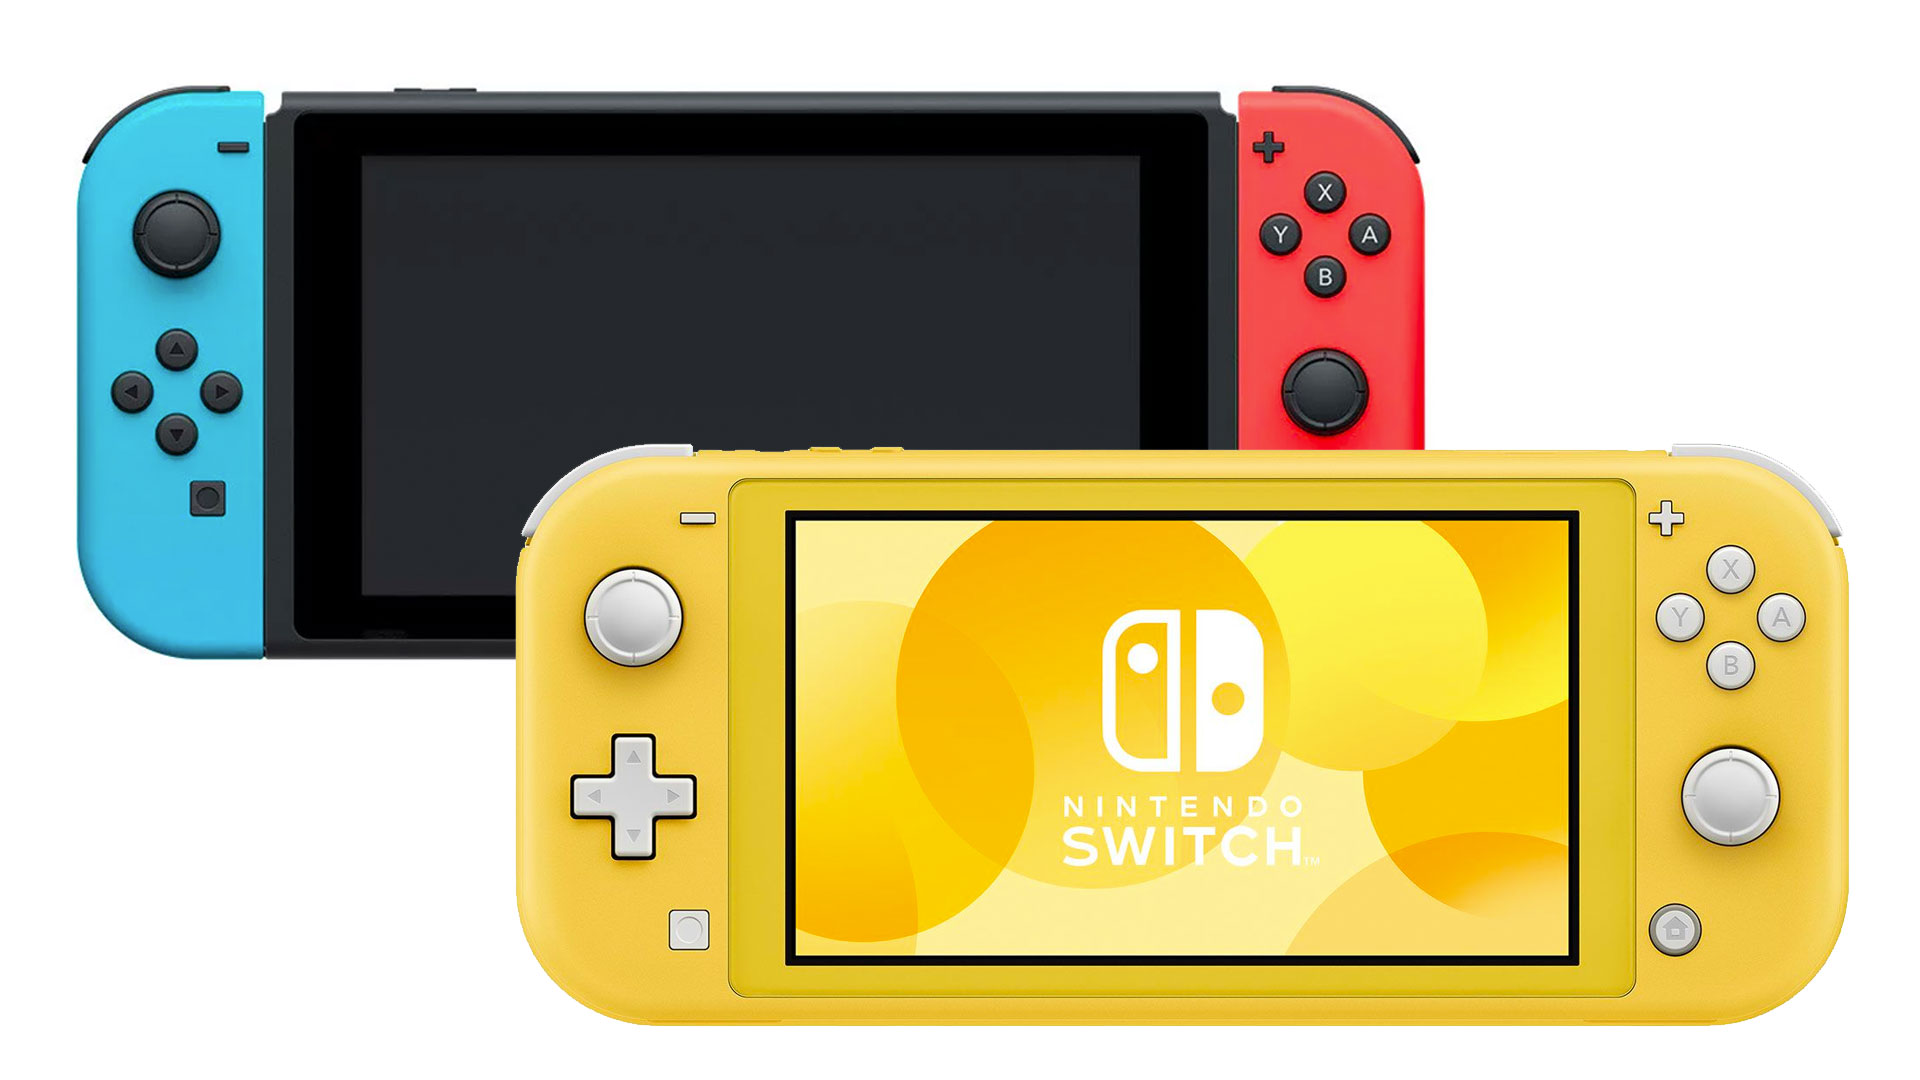 Nintendo Switch Vs Nintendo Switch Lite Which Should You Buy